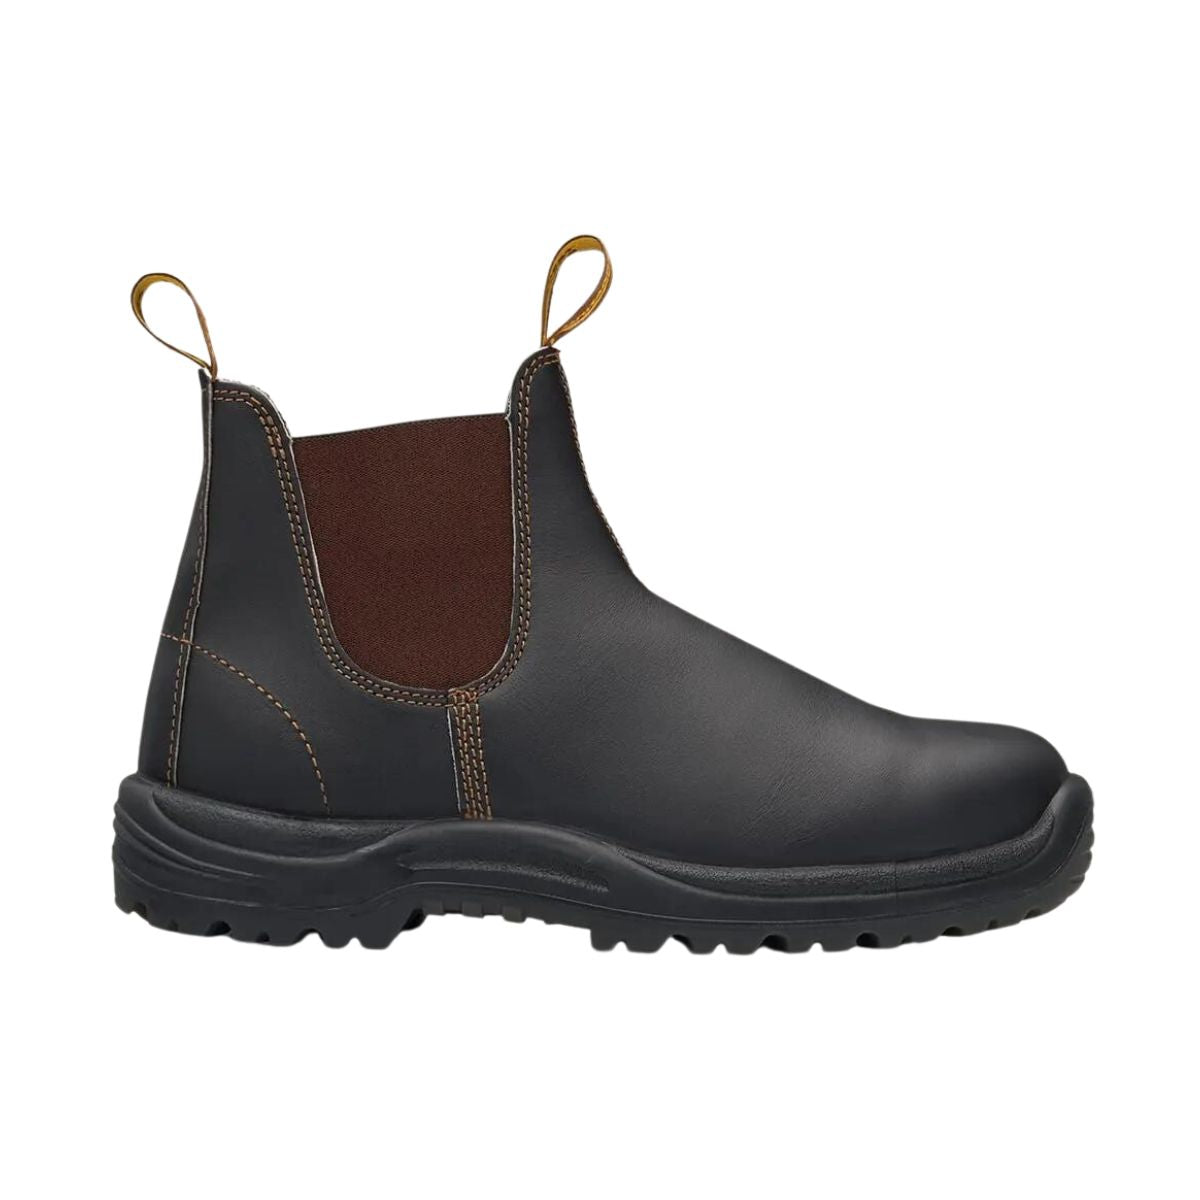 Blundstone Unisex Elastic Sided Safety Boots #172 Size 10